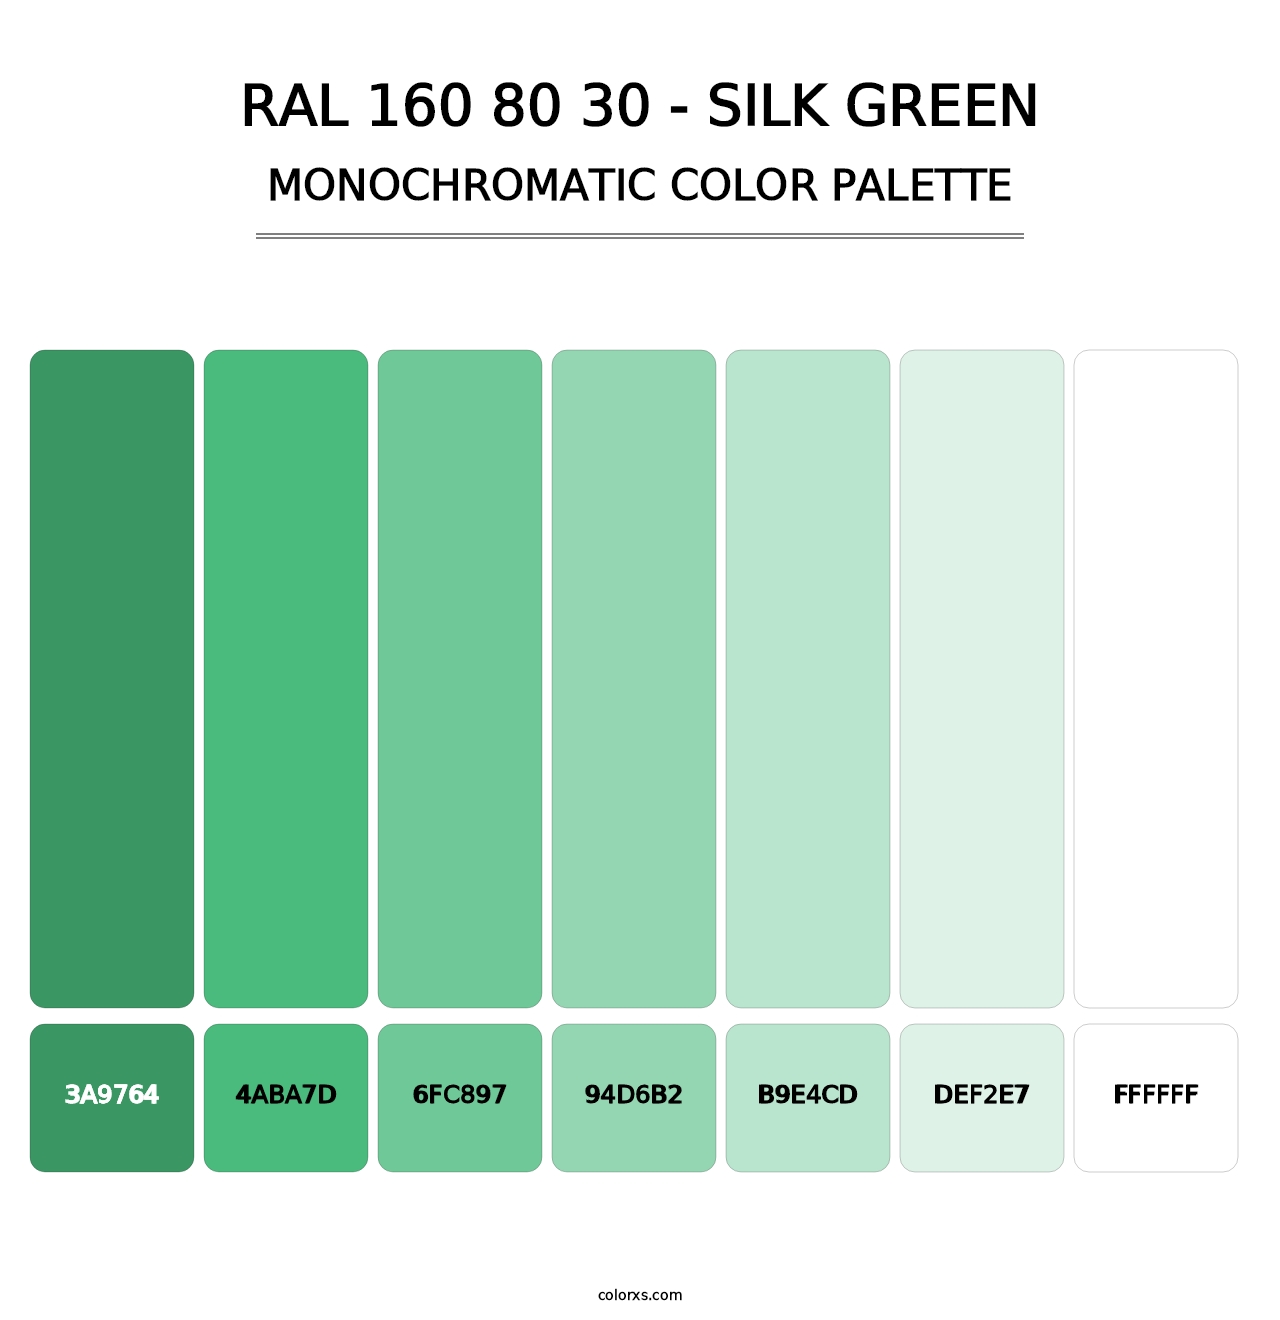 RAL 160 80 30 - Silk Green - Monochromatic Color Palette